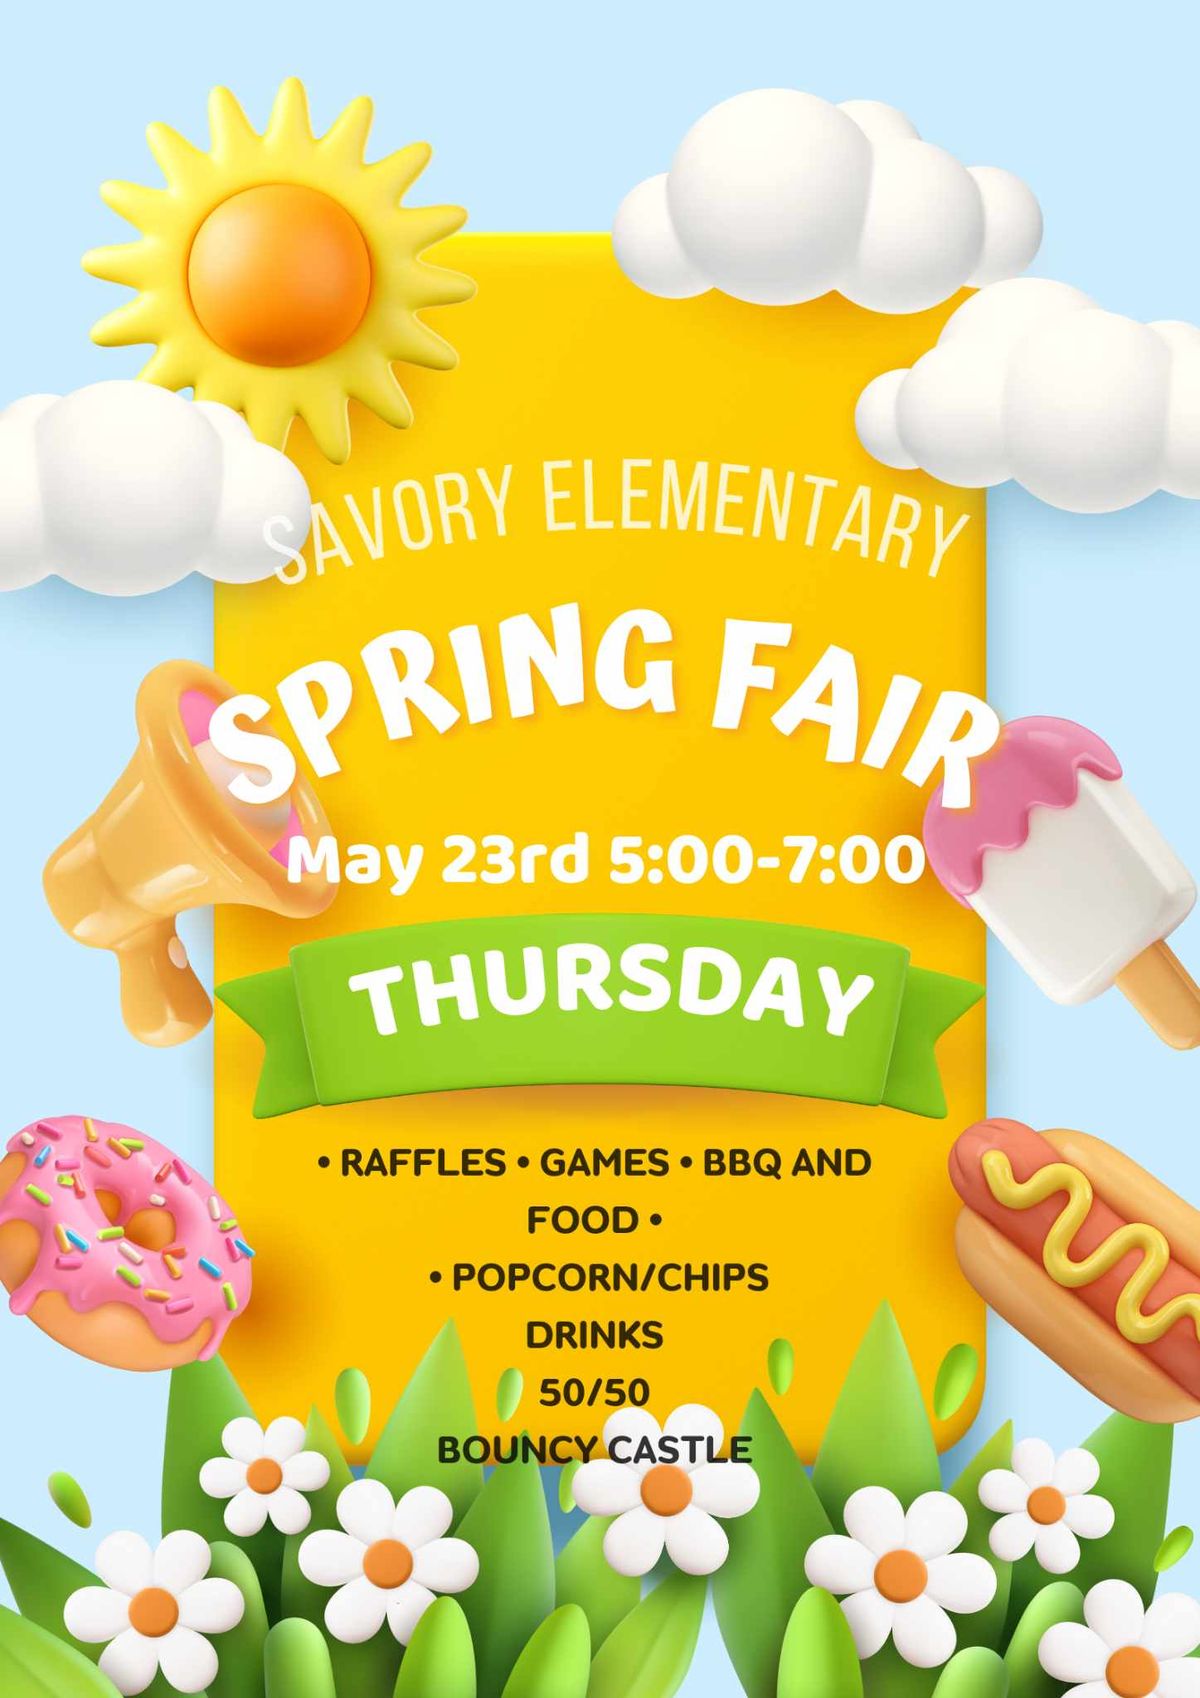 Savory Elementary School Spring Fair